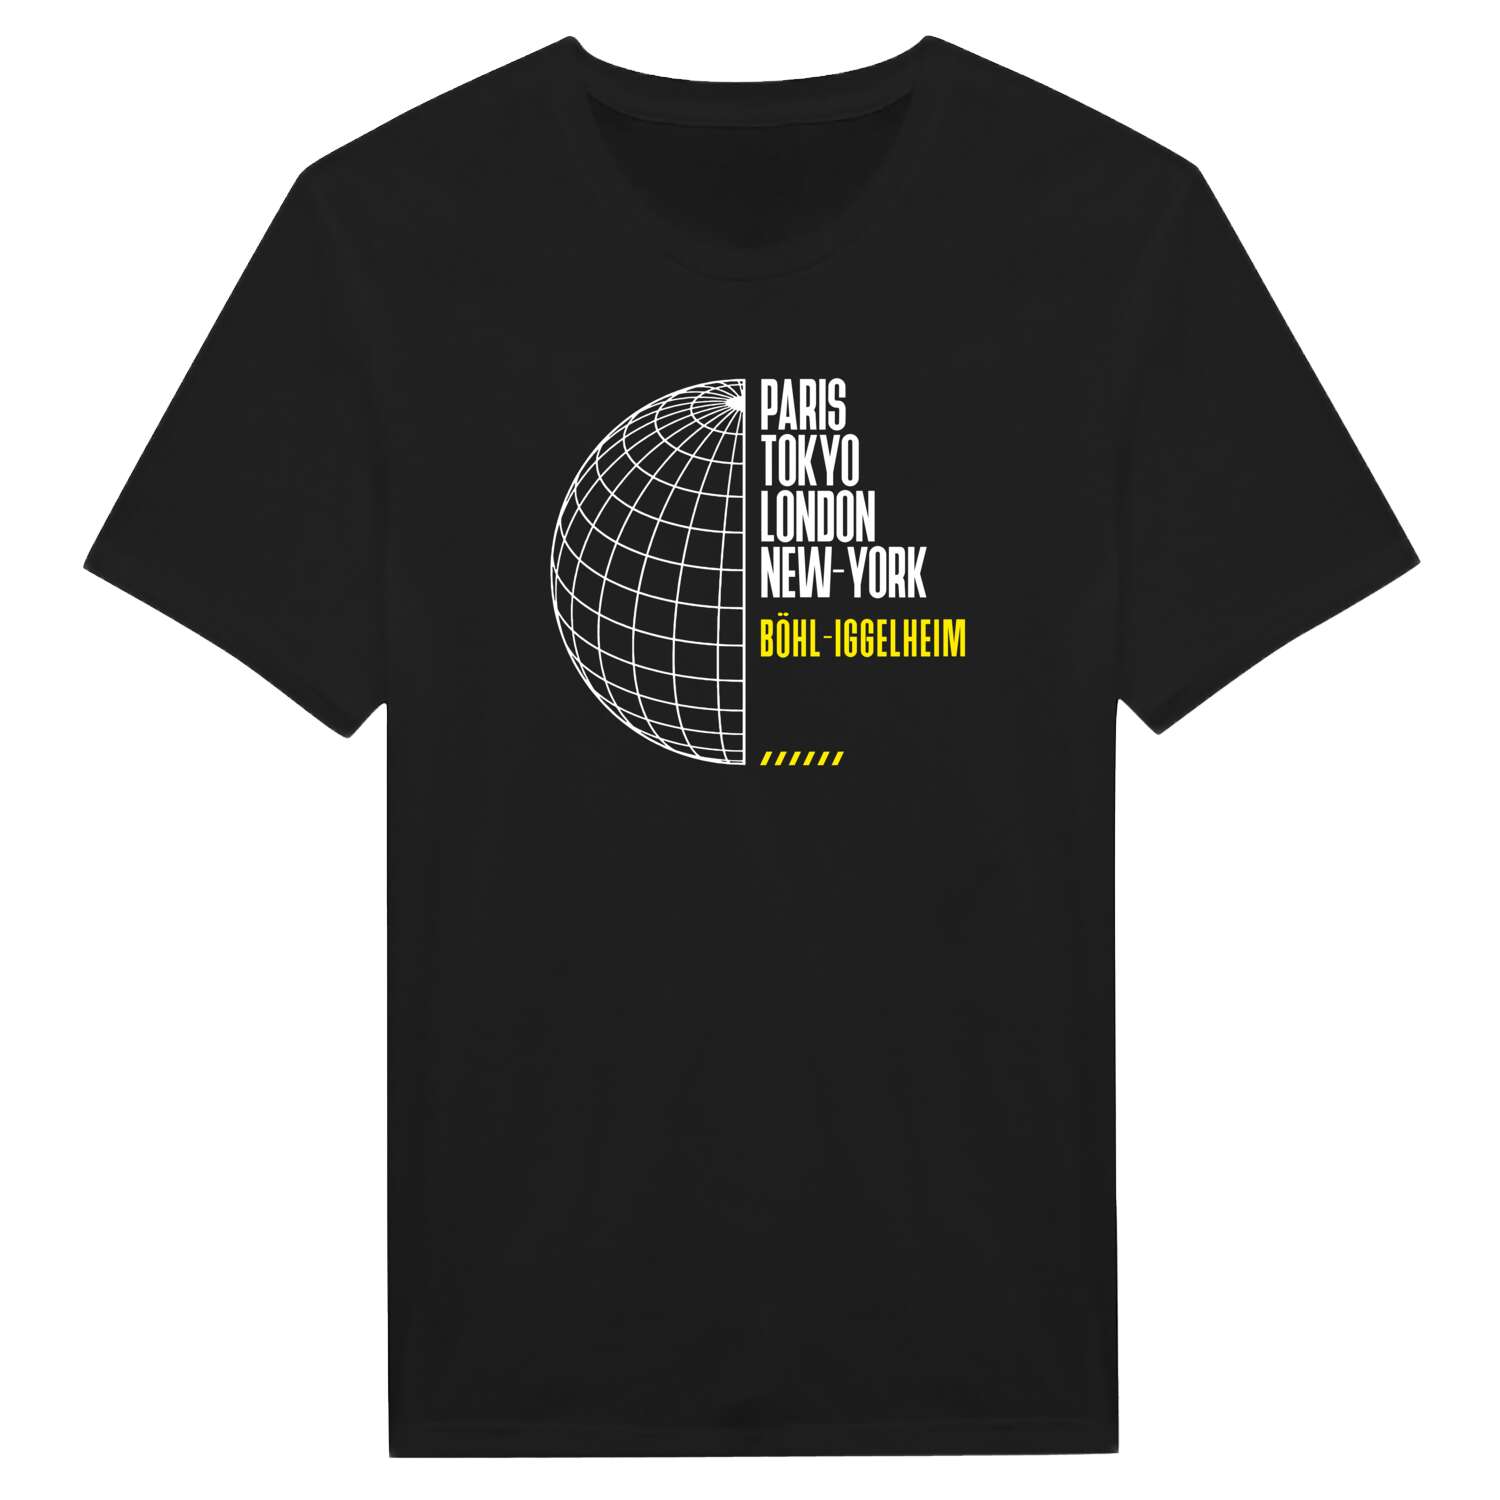 Böhl-Iggelheim T-Shirt »Paris Tokyo London«